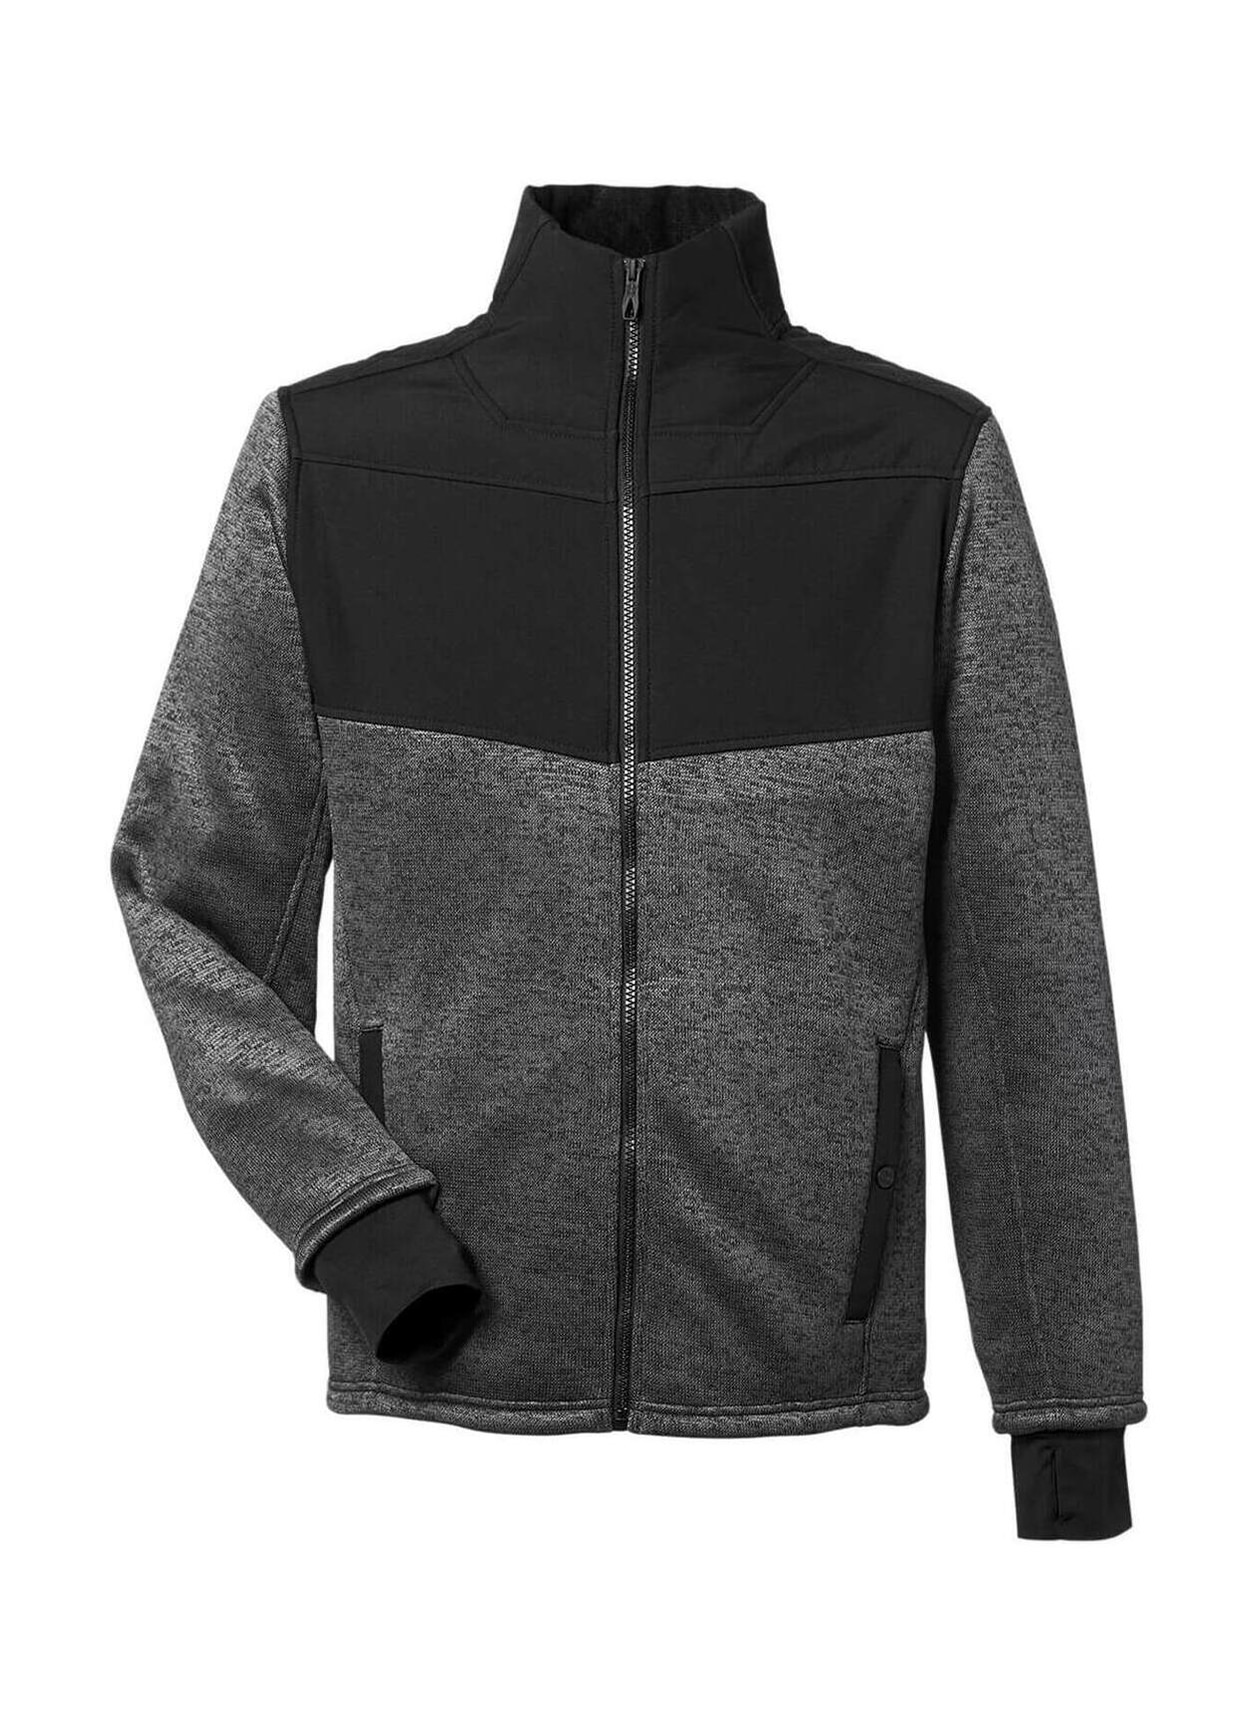 Spyder Men's Polar Powder / Black Passage Sweater Jacket